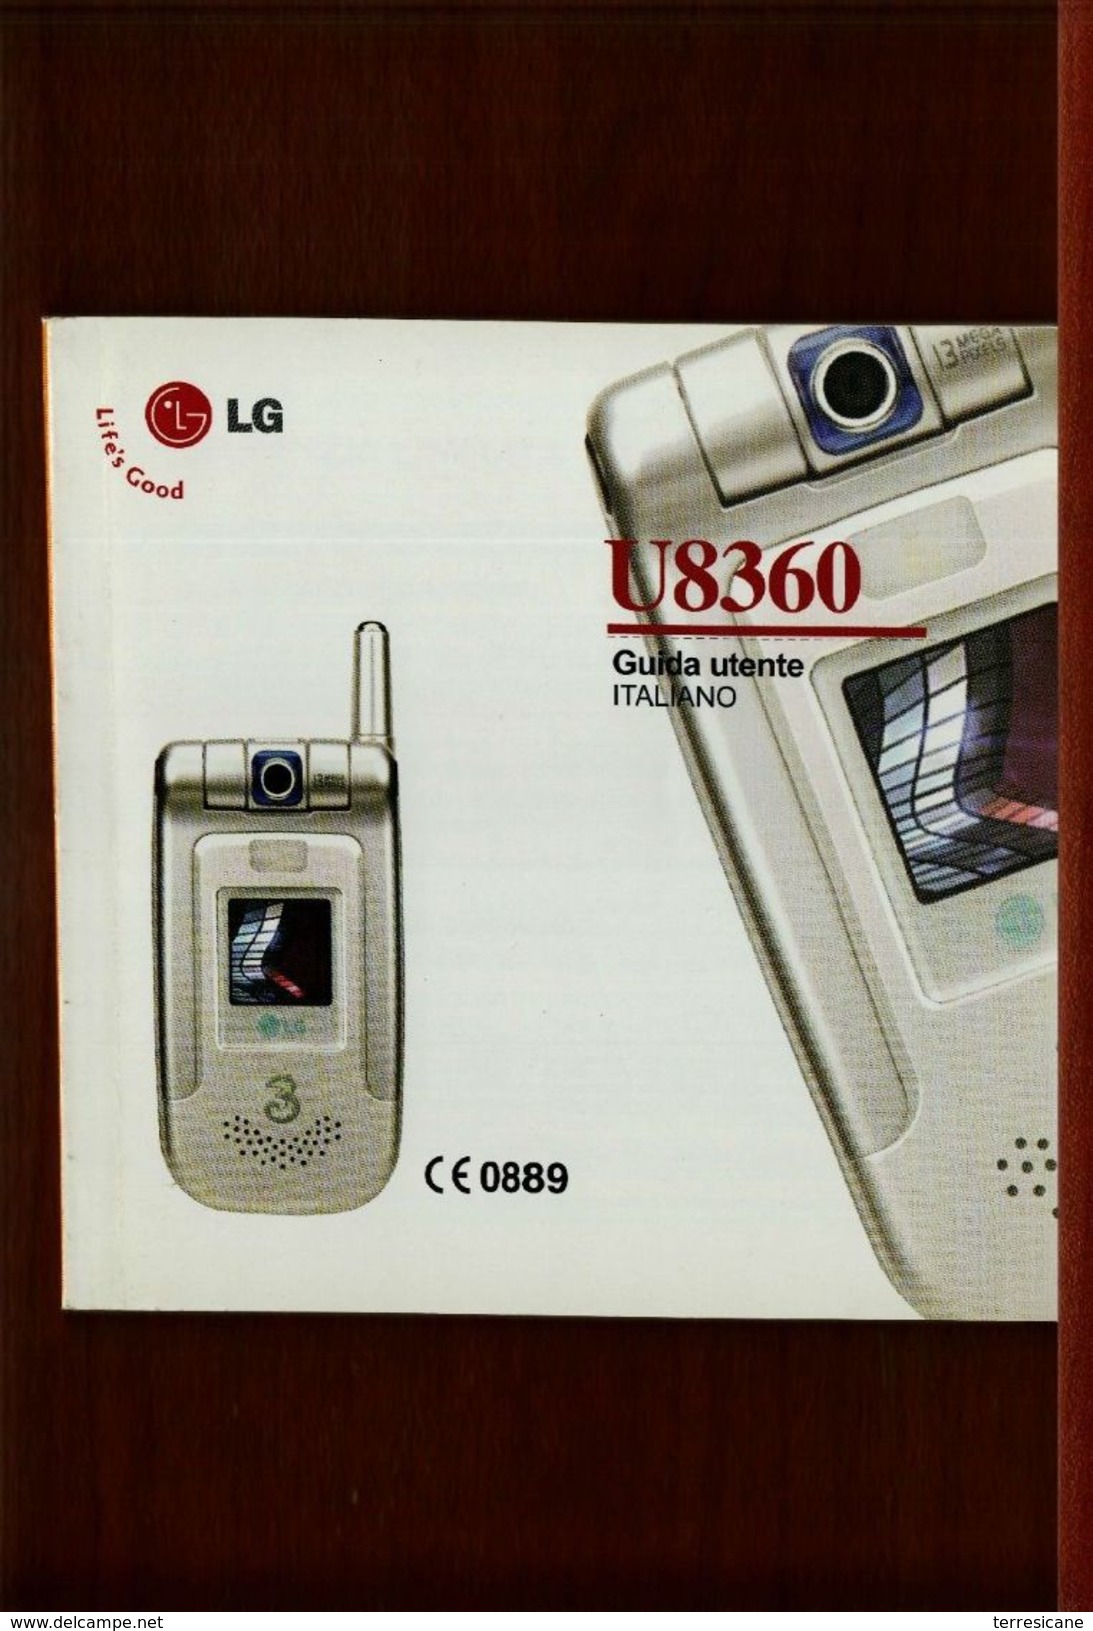 X LG U8360 GUIDA UTENTE ITALIANO - Telephony